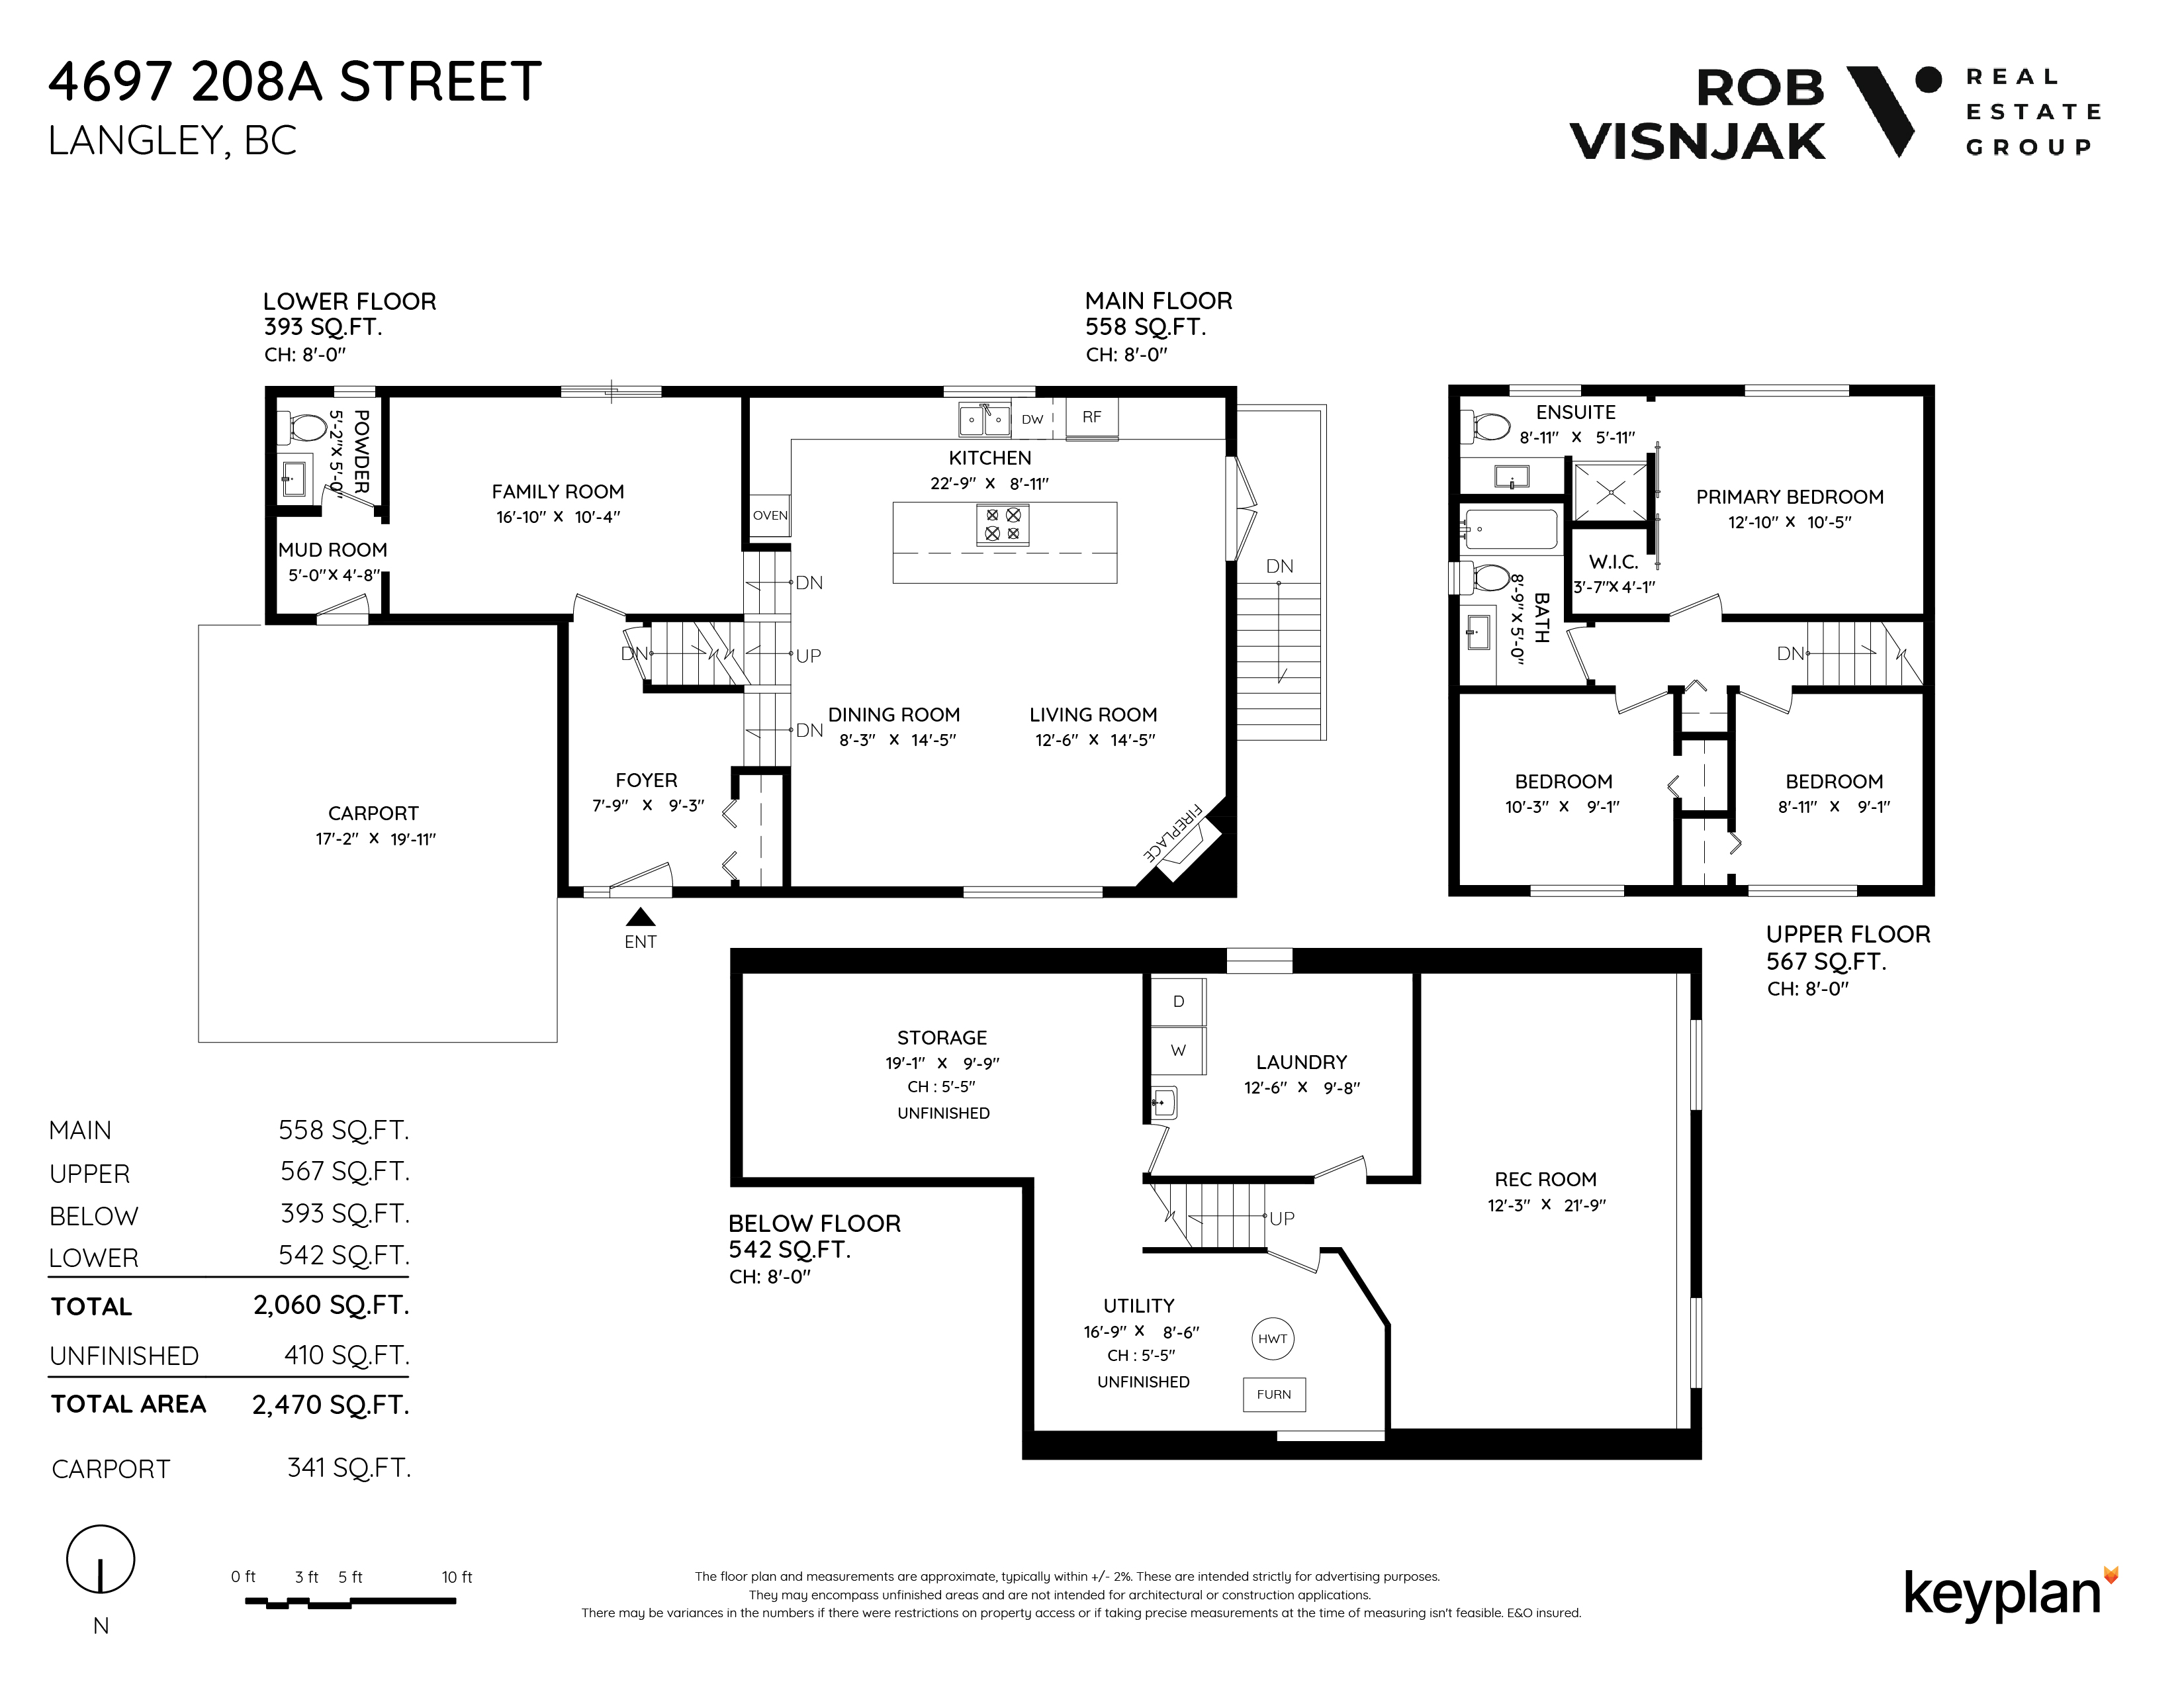 Rob Visnjak - 4697 208A Street, Langley, BC, Canada | Floor Plan 1